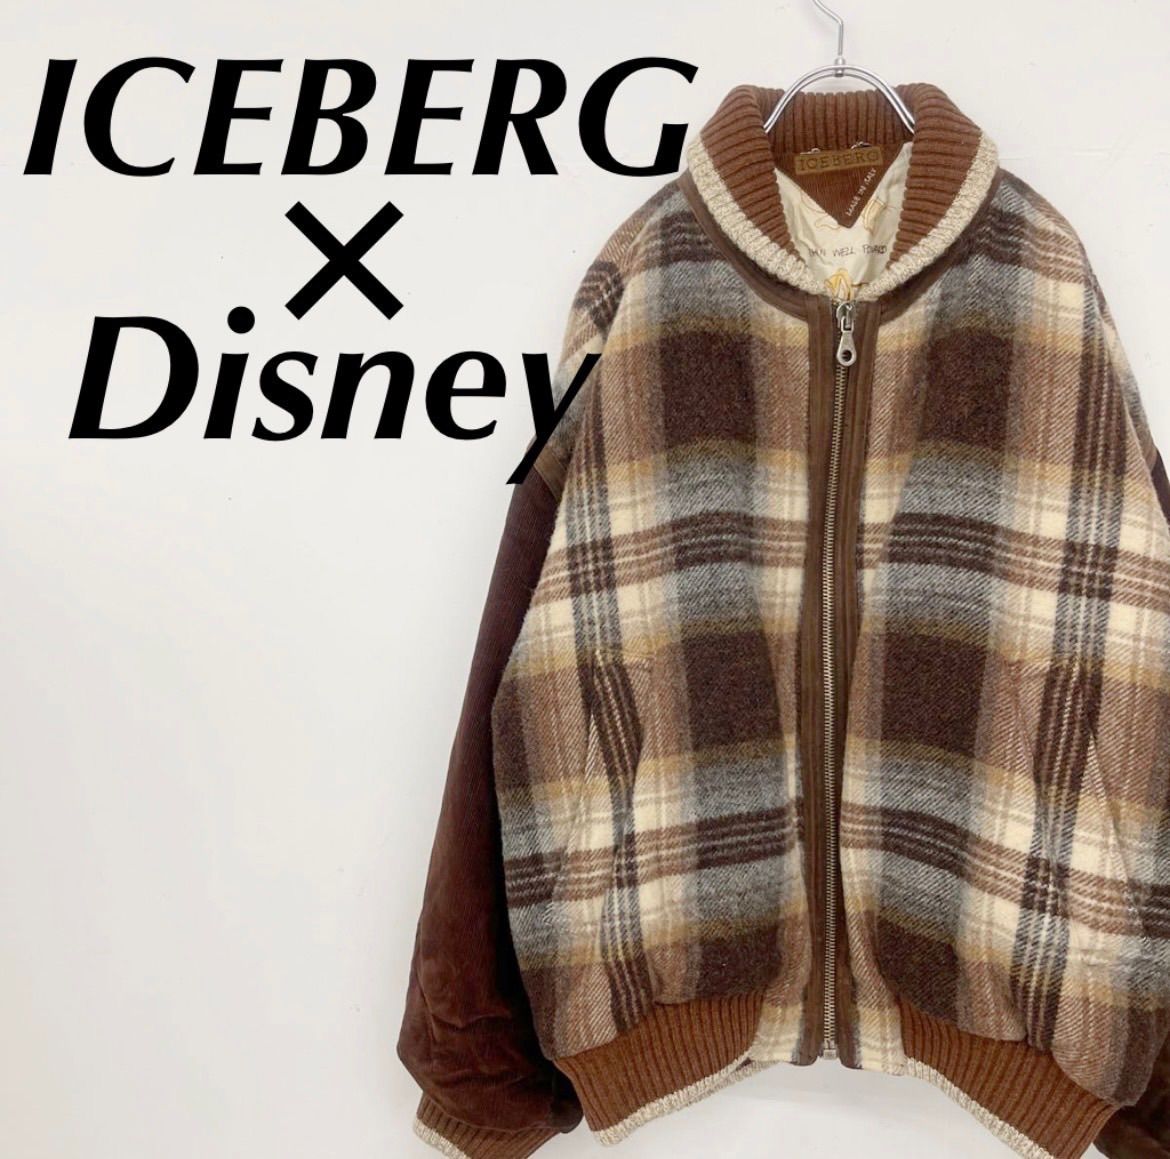 ICEBERG Disneyプルートジャケット